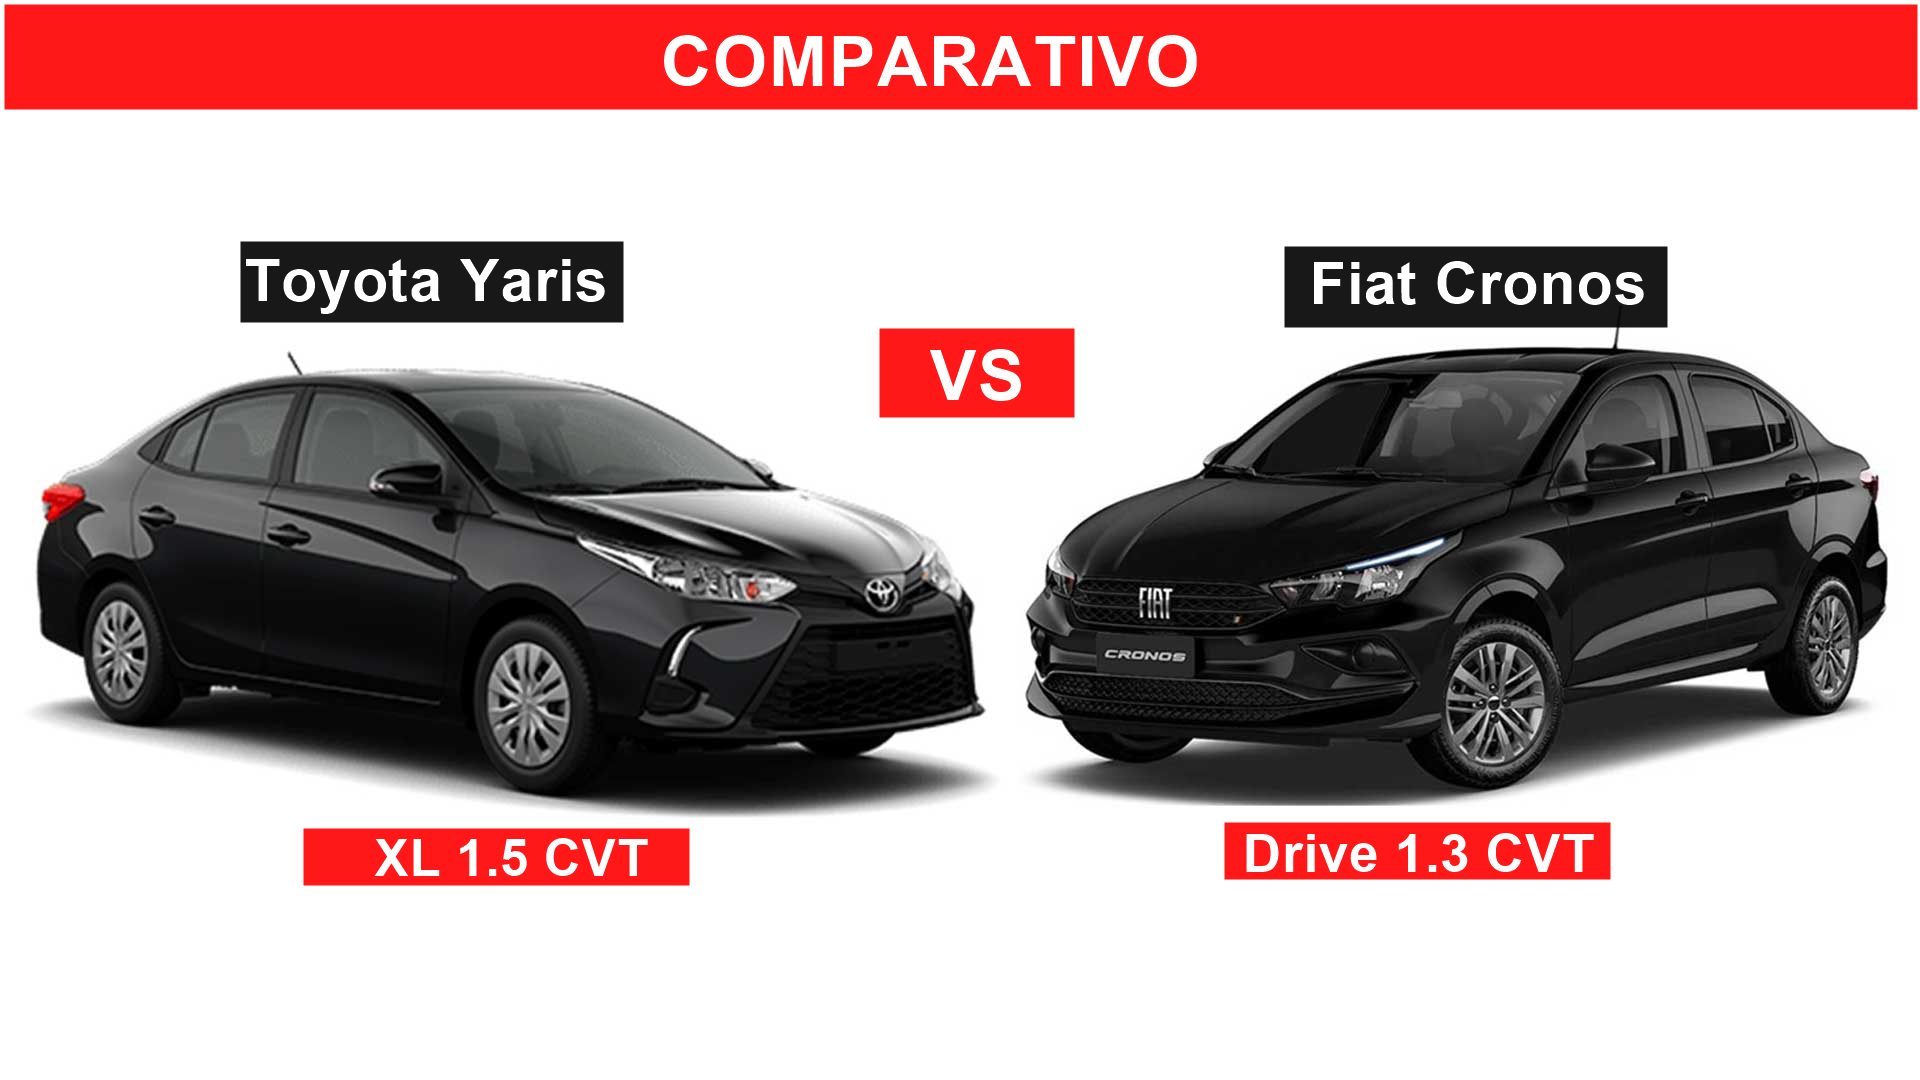 Comparativo: Fiat Cronos Drive 1.3 CVT x Toyota Yaris Sedan XL 1.5 CVT -  Mundo do Automóvel para PCD